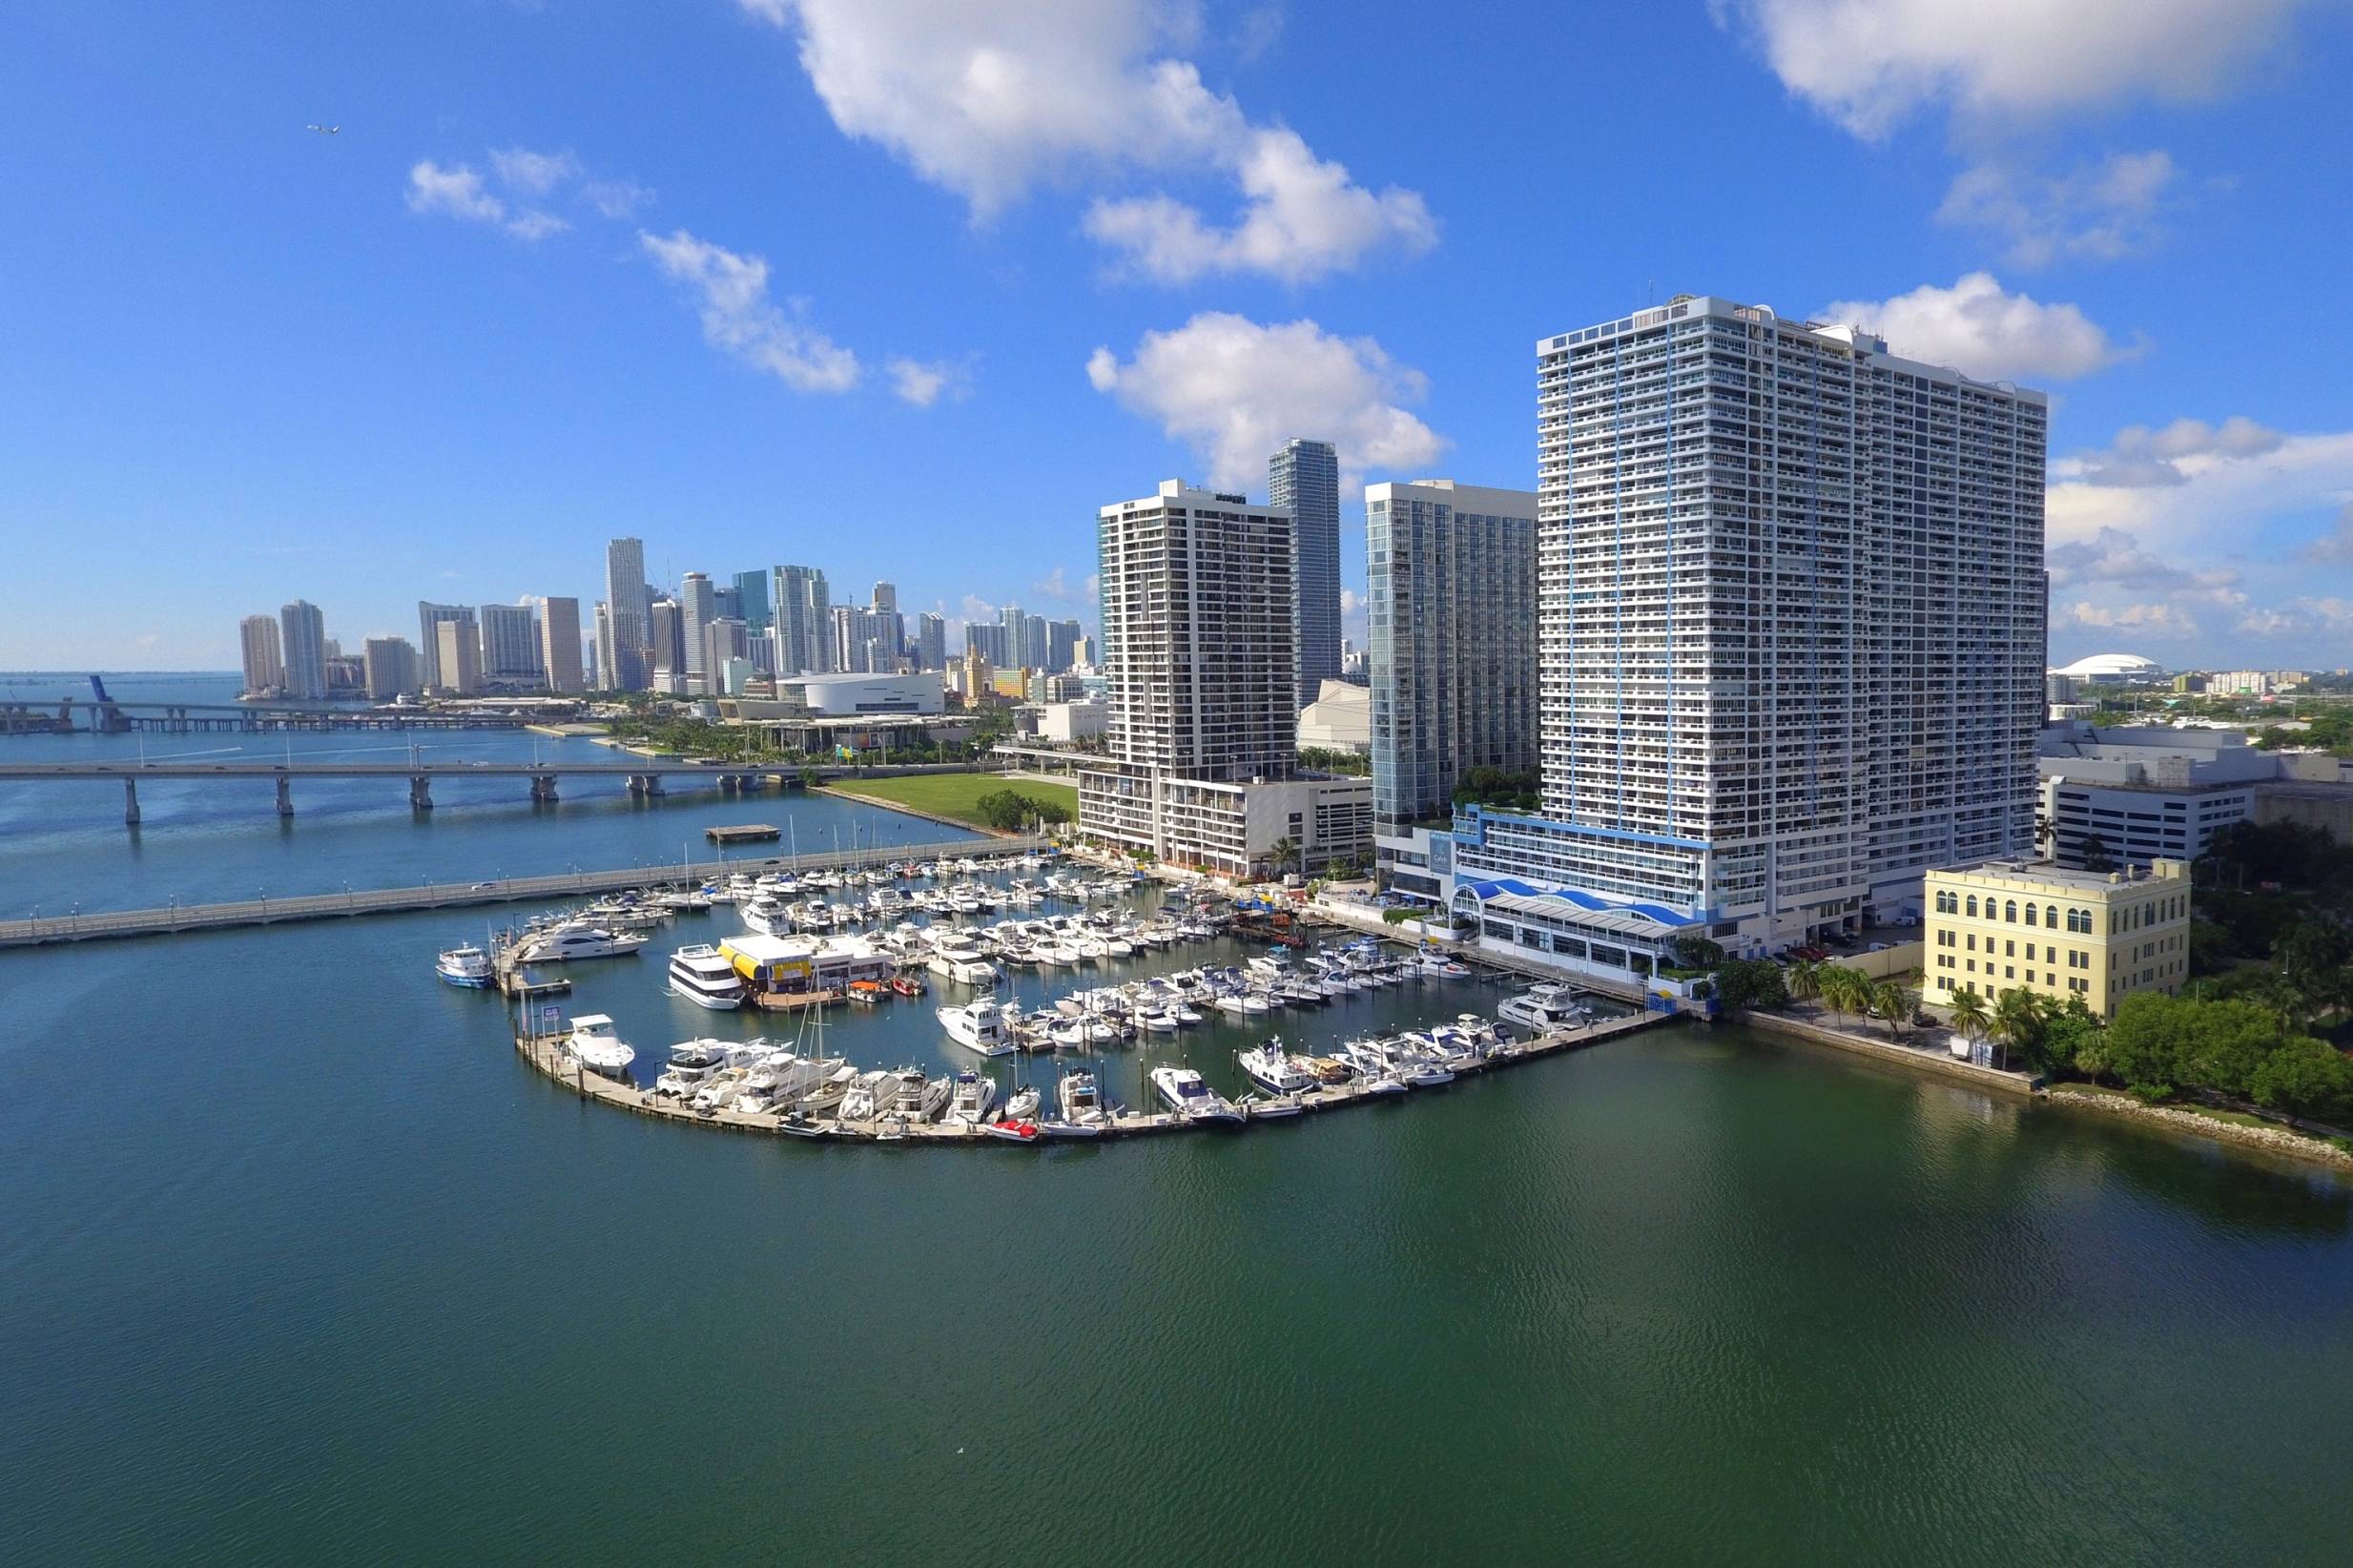 Miami marina: Norwegian is chartering extra capacity for transatlantic flights